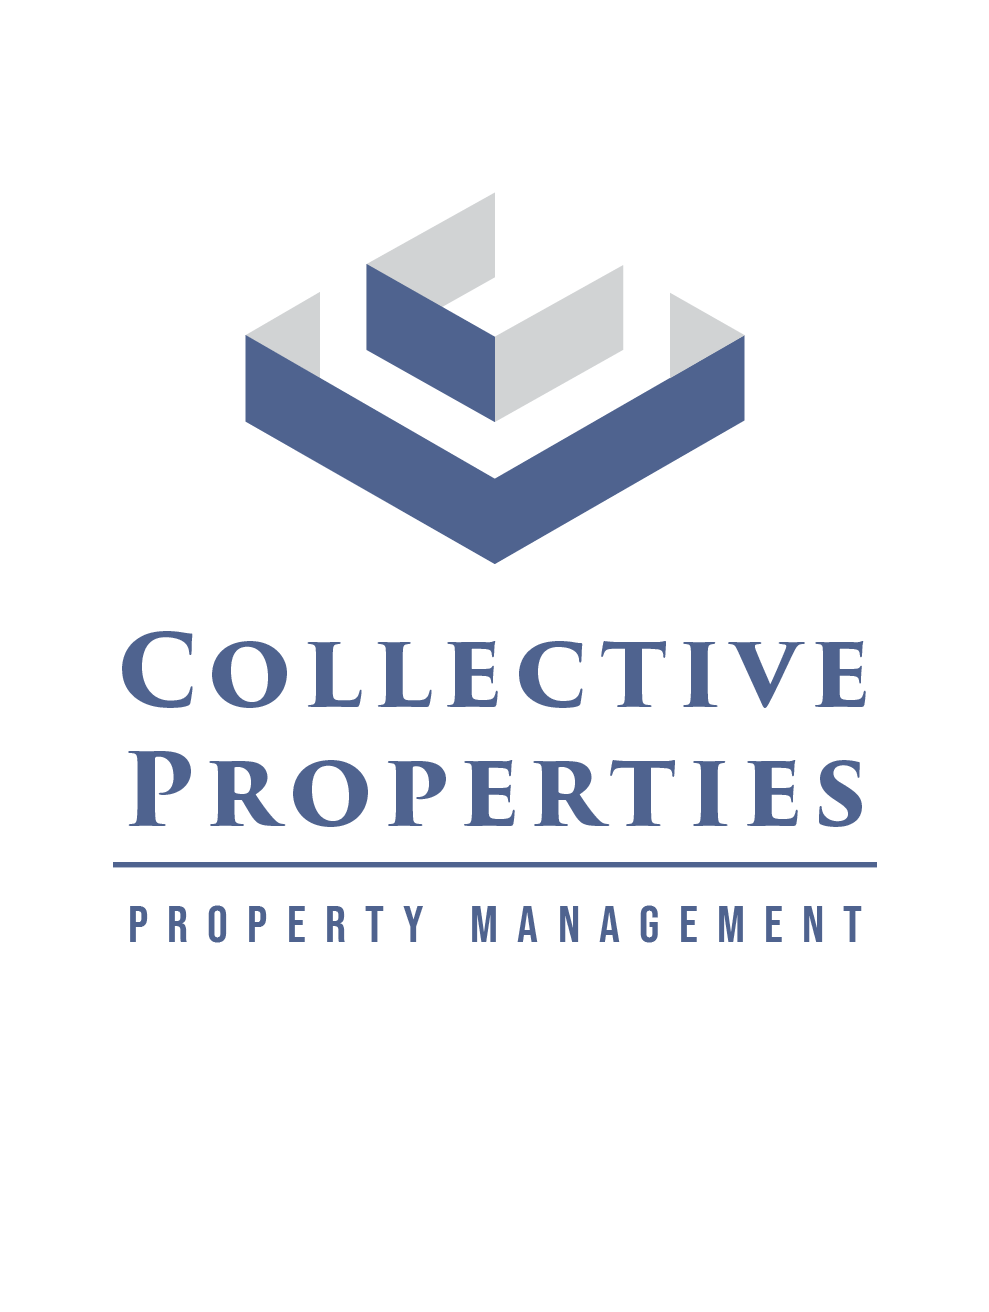 Collective Properties, Inc